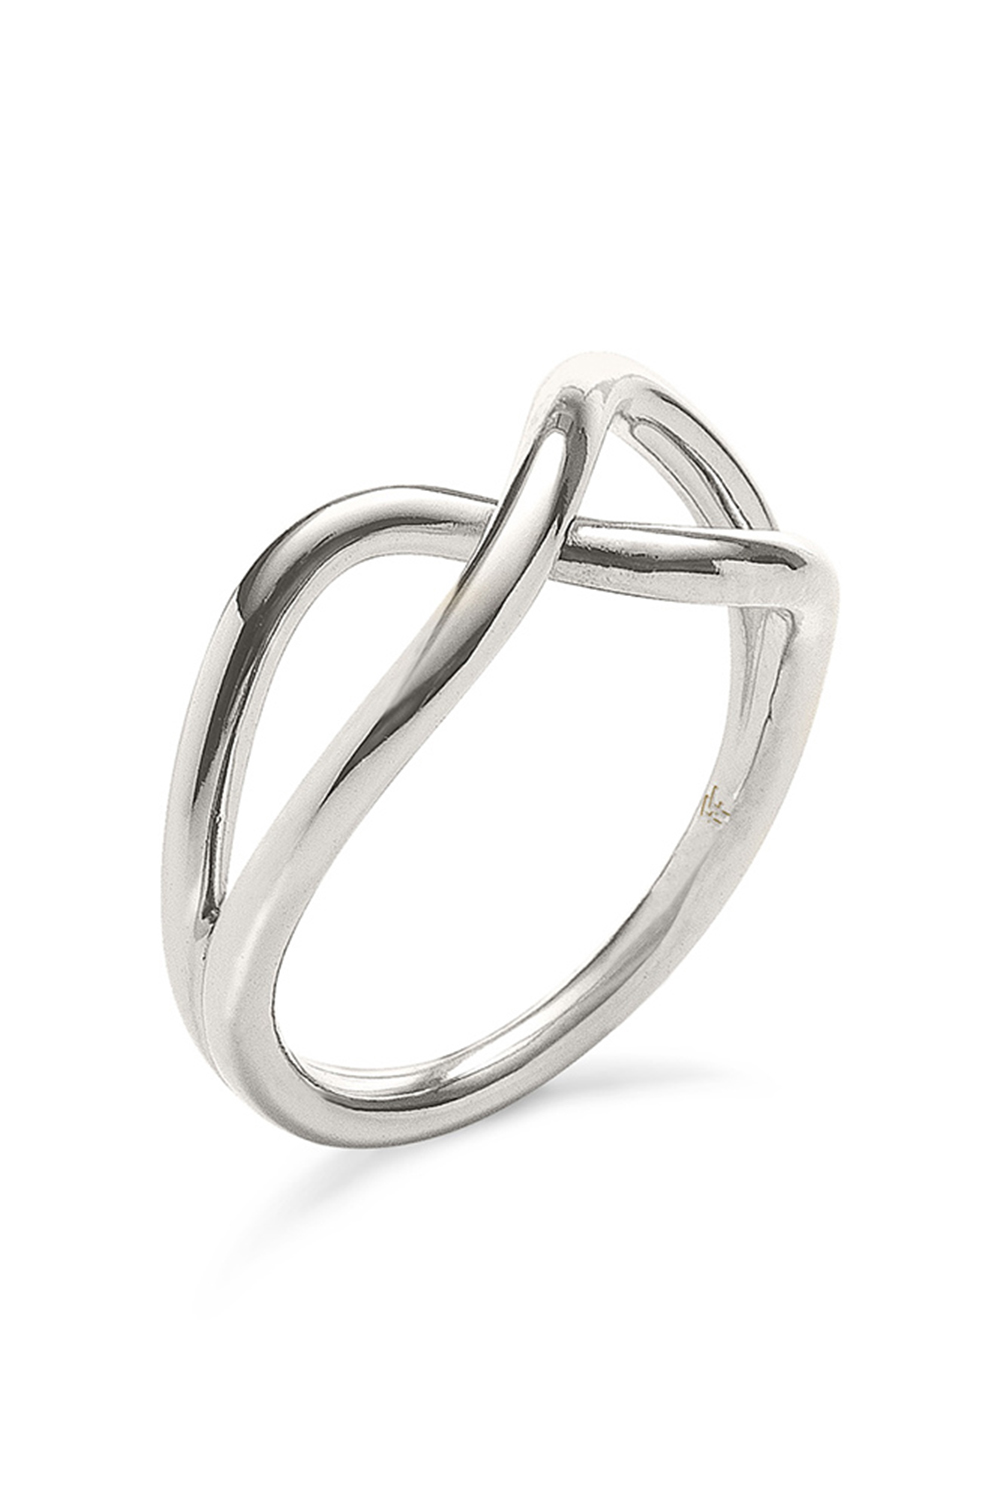 FOLLI FOLLIE – Γυναικείο δαχτυλίδι από ορείχαλκο FOLLI FOLLIE FLUIDITY ασημί 1R20N005